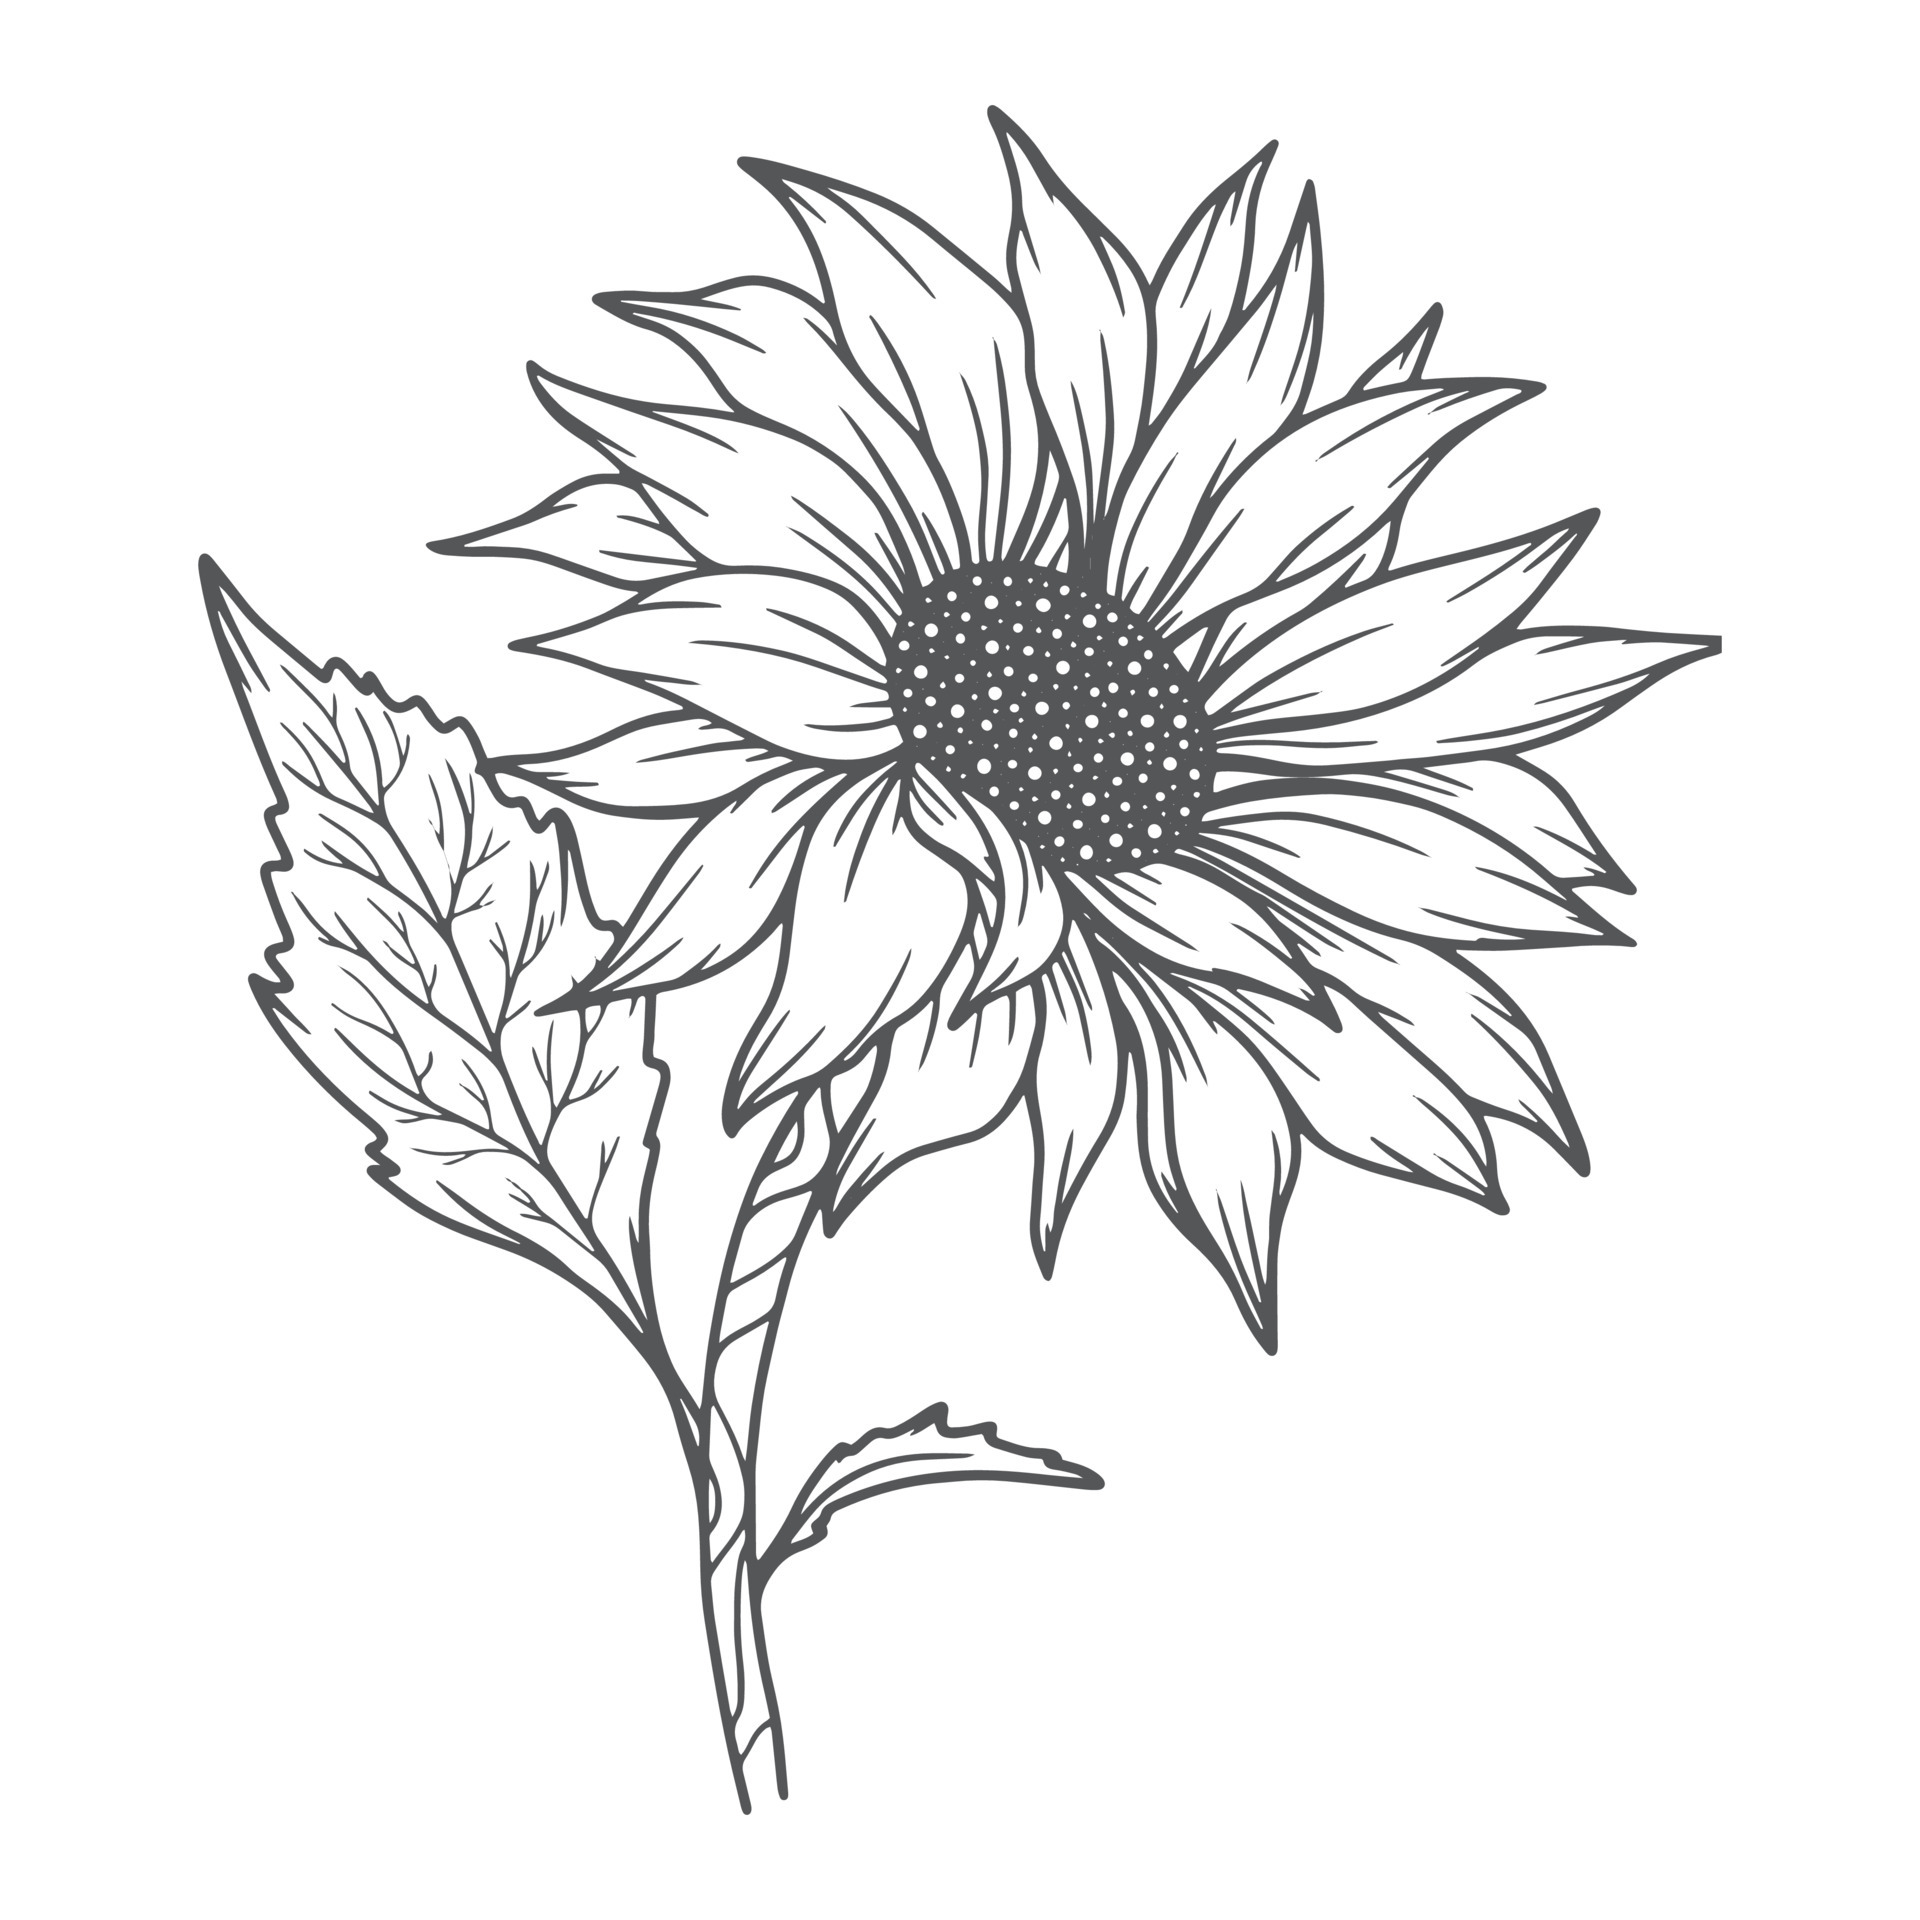 Sunflower line drawing - lapfans.com